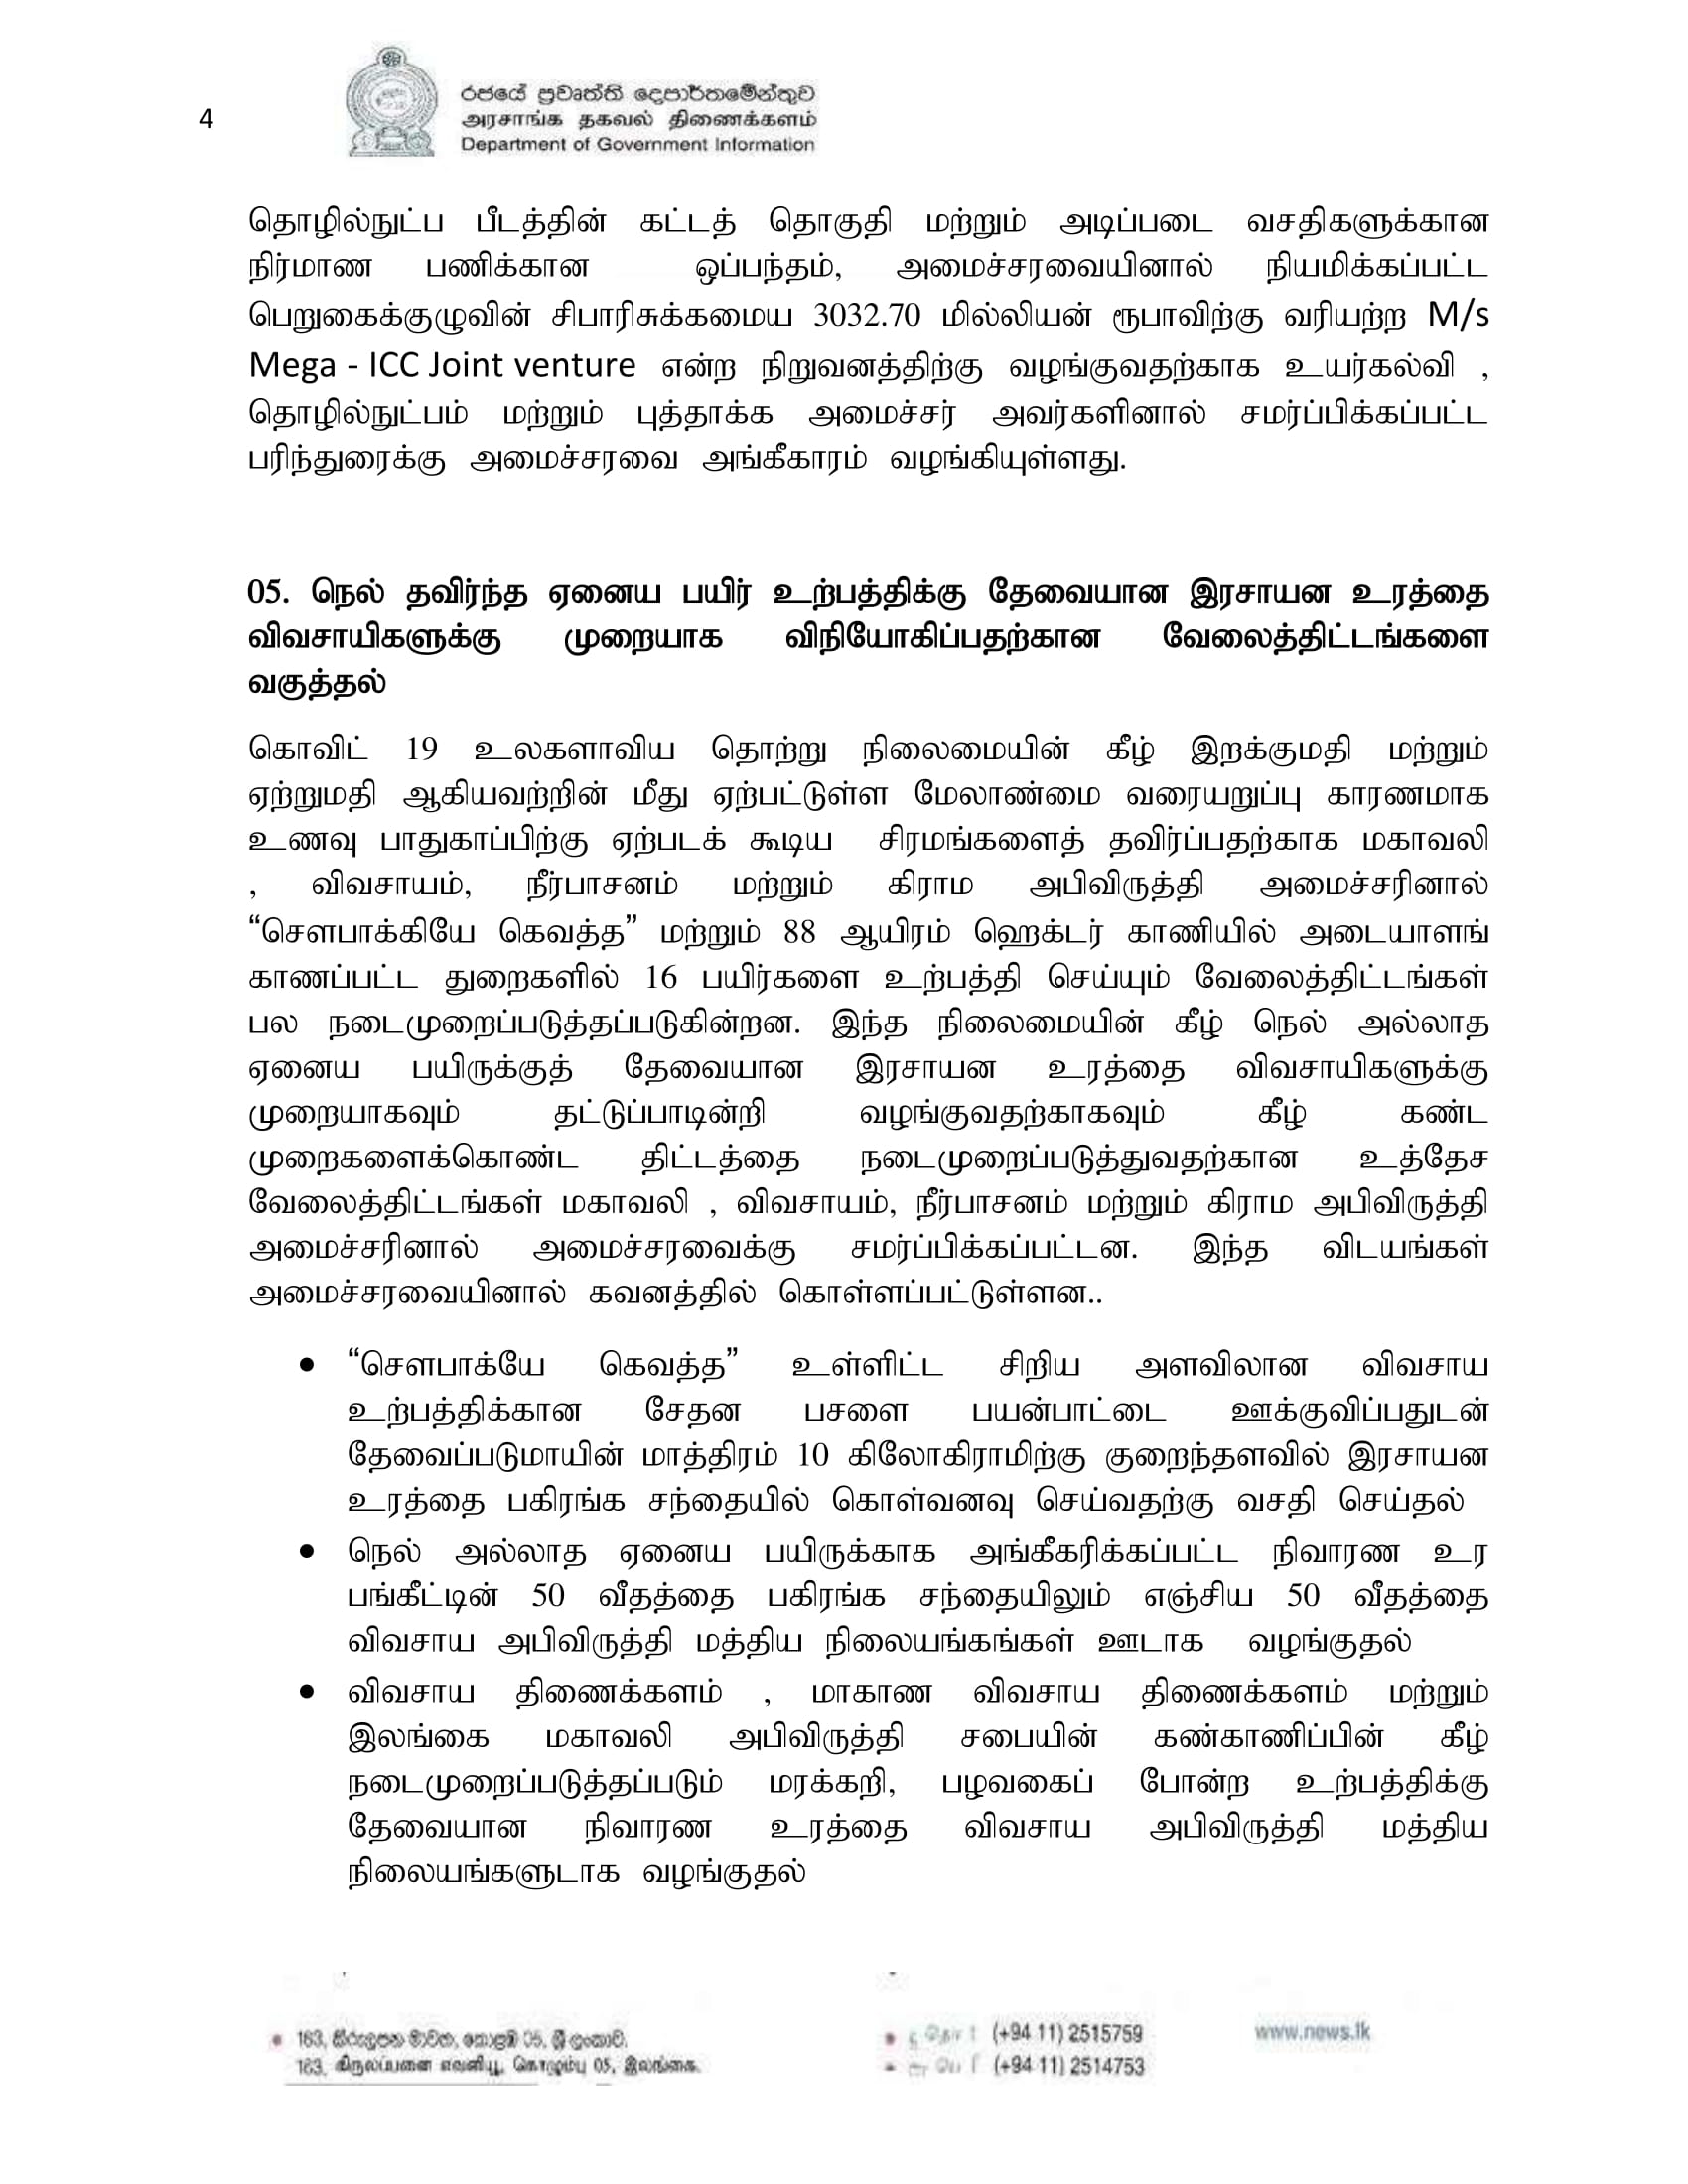 2020.06.24 Cabinet Tamil 1 1 4